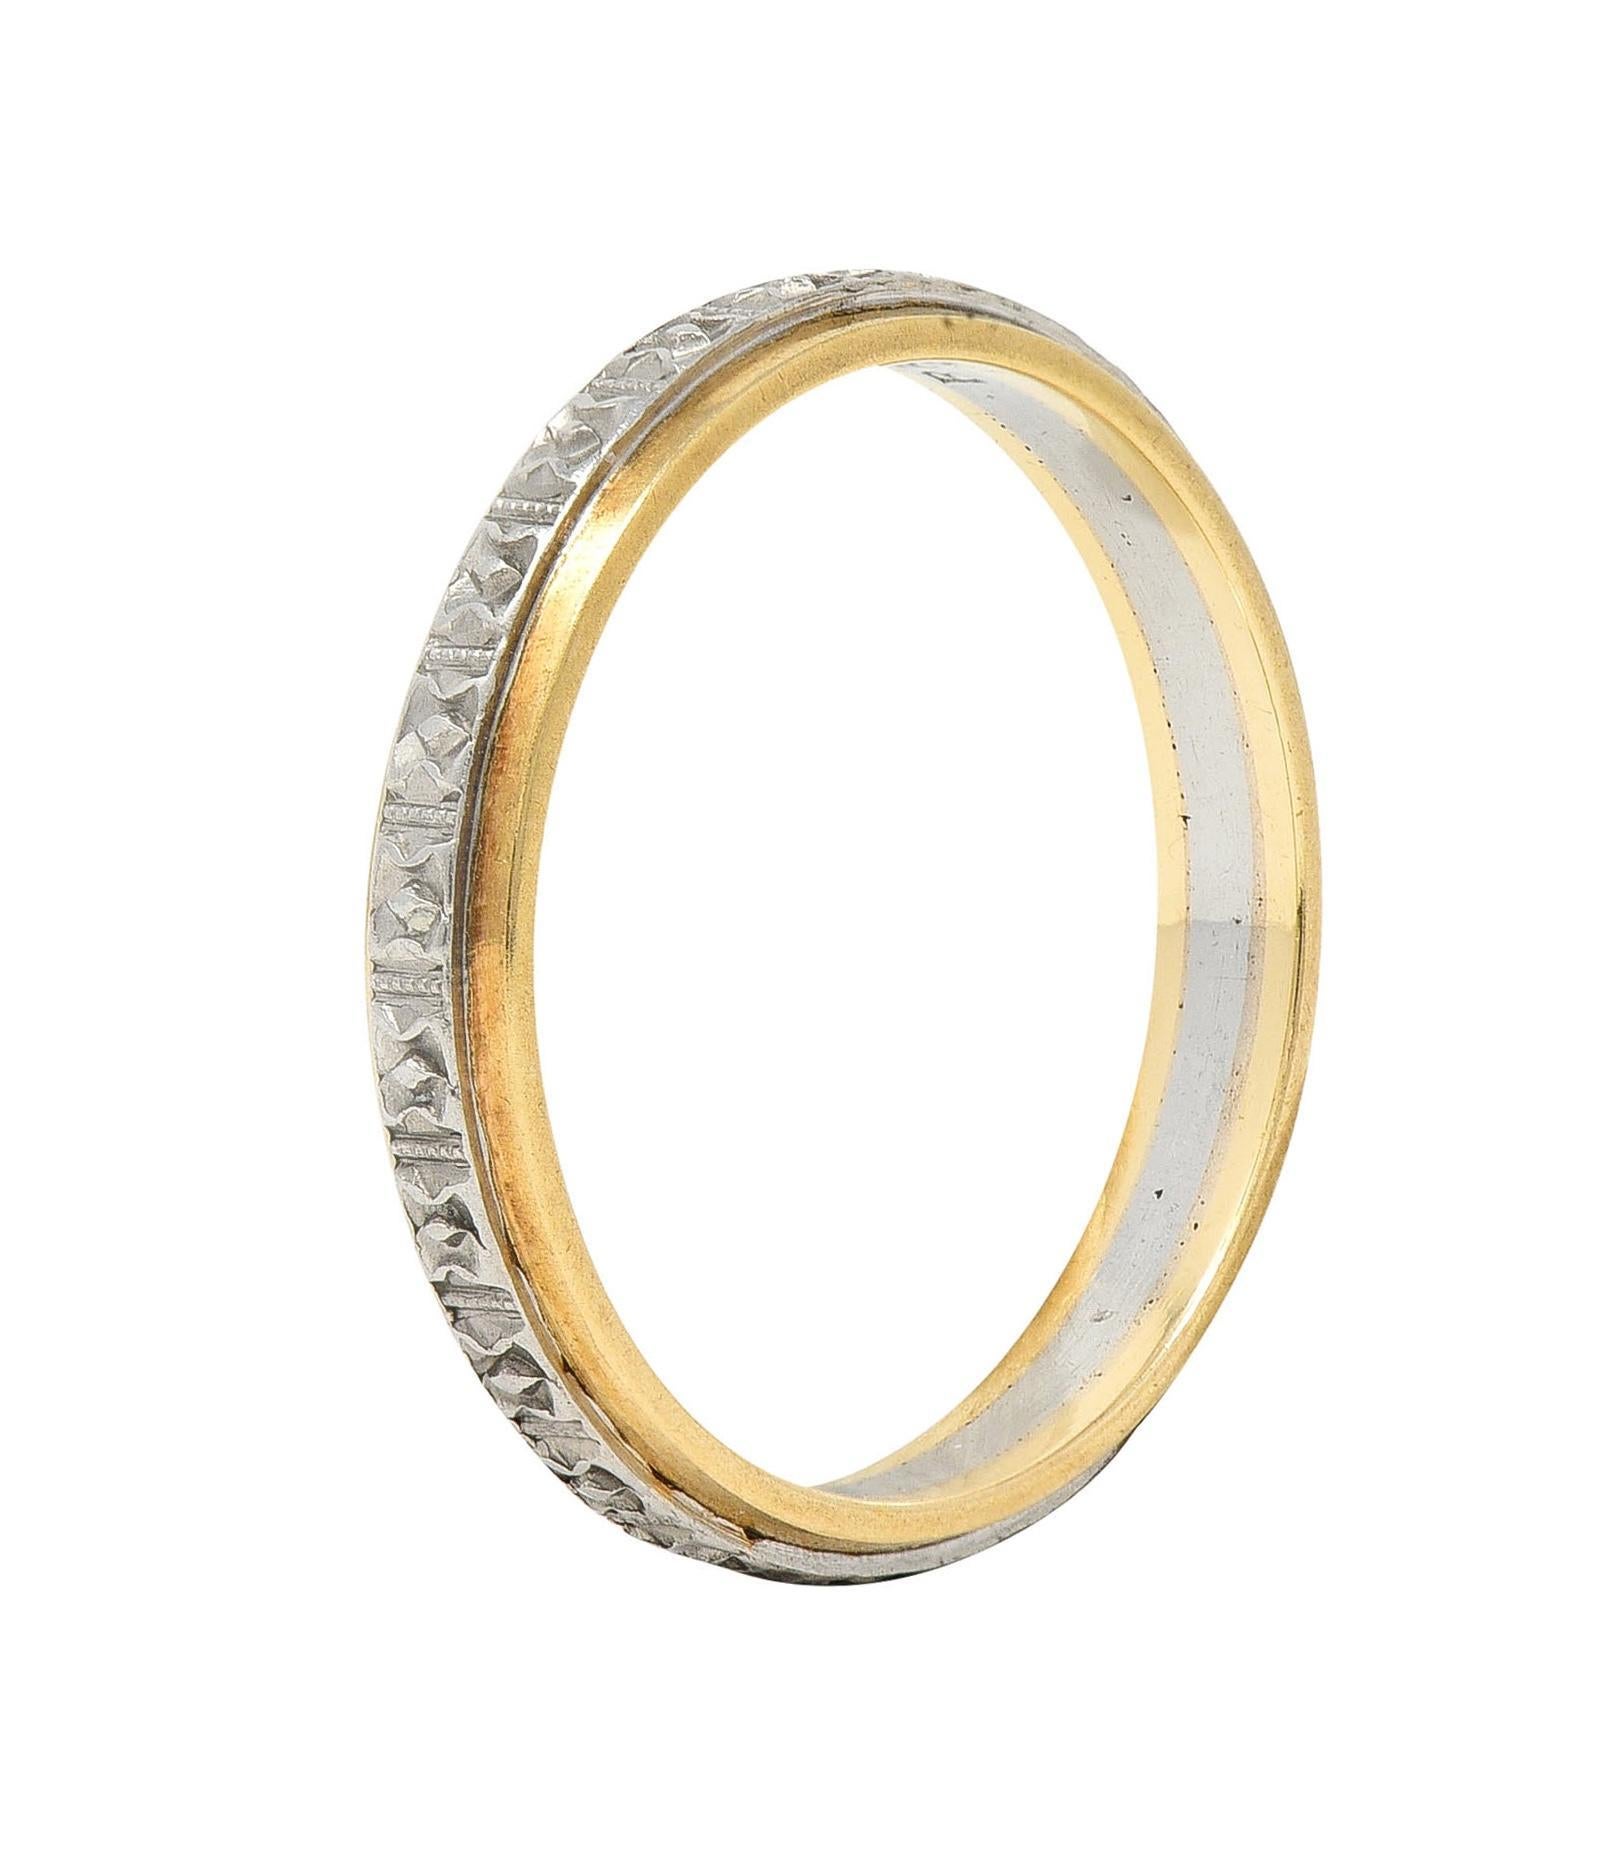 Art Deco Bristol Ring Co. Platinum 14 Karat Yellow Gold Orange Blossom Ring For Sale 1